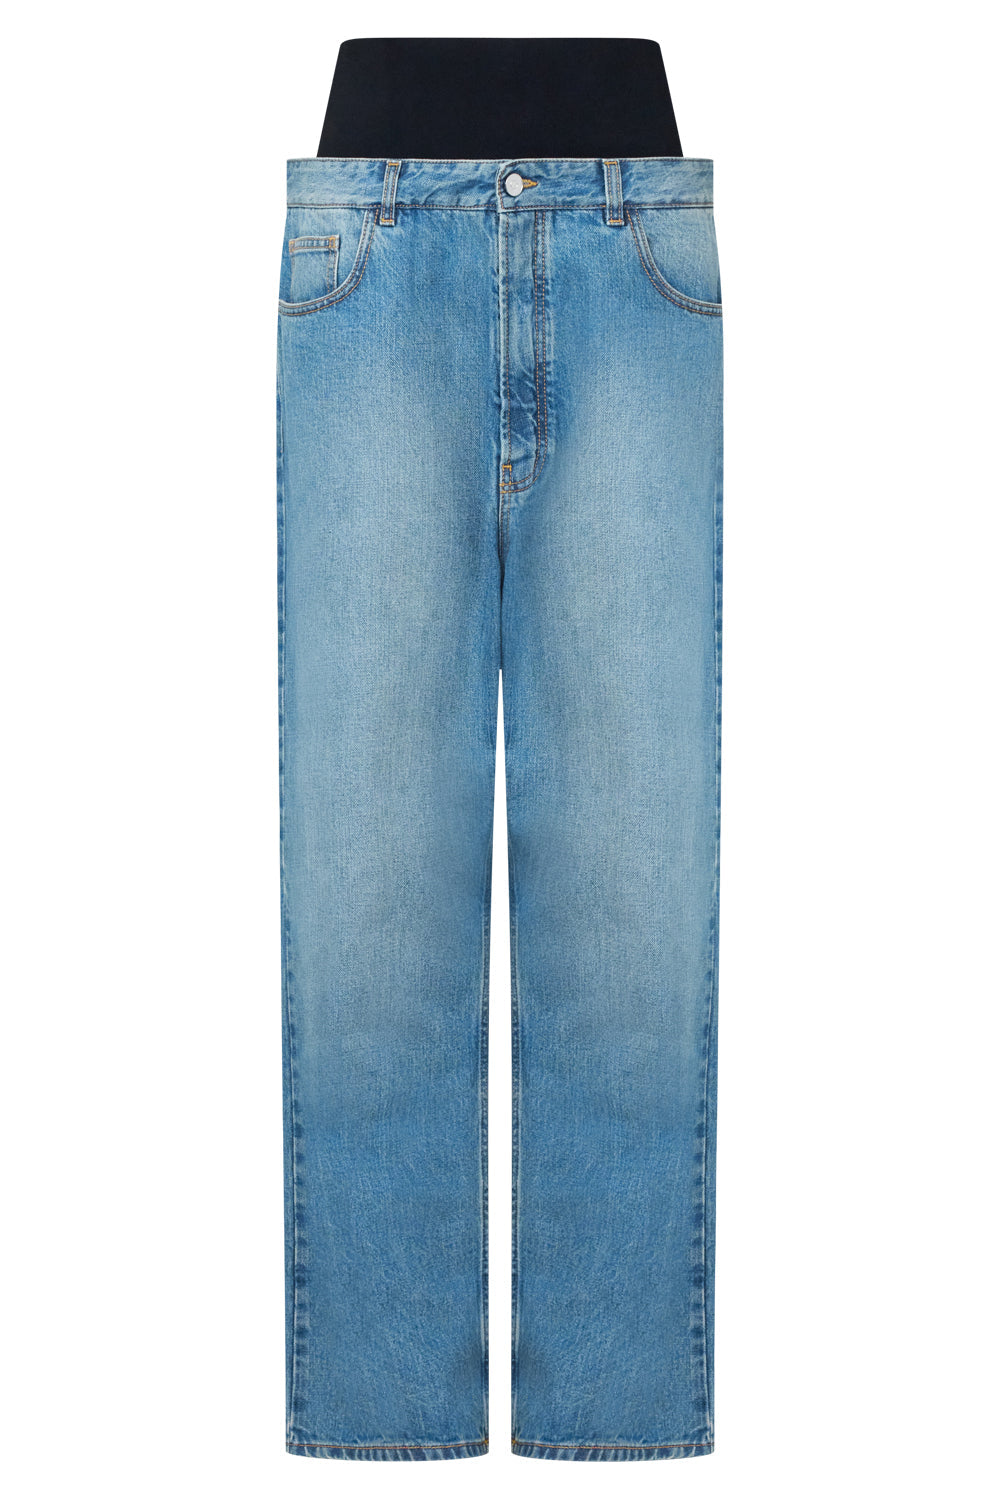 Vintage Alia Sport Petite Blue Denim Pants